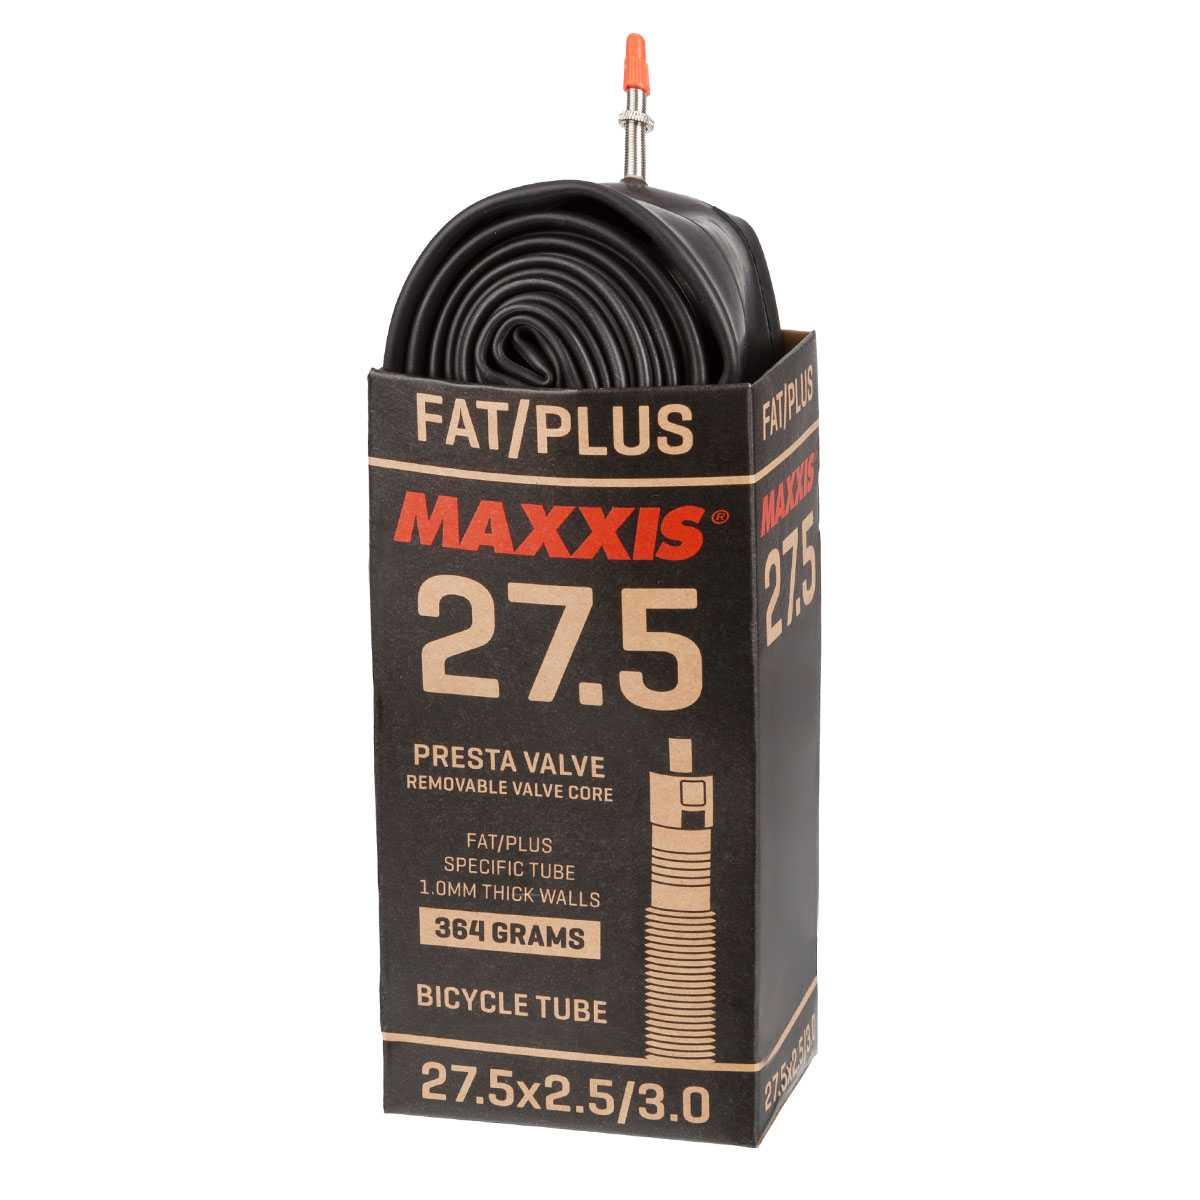 Maxxis MTB-Schlauch Fatbike 27.5 Zoll, Ventil 36 mm